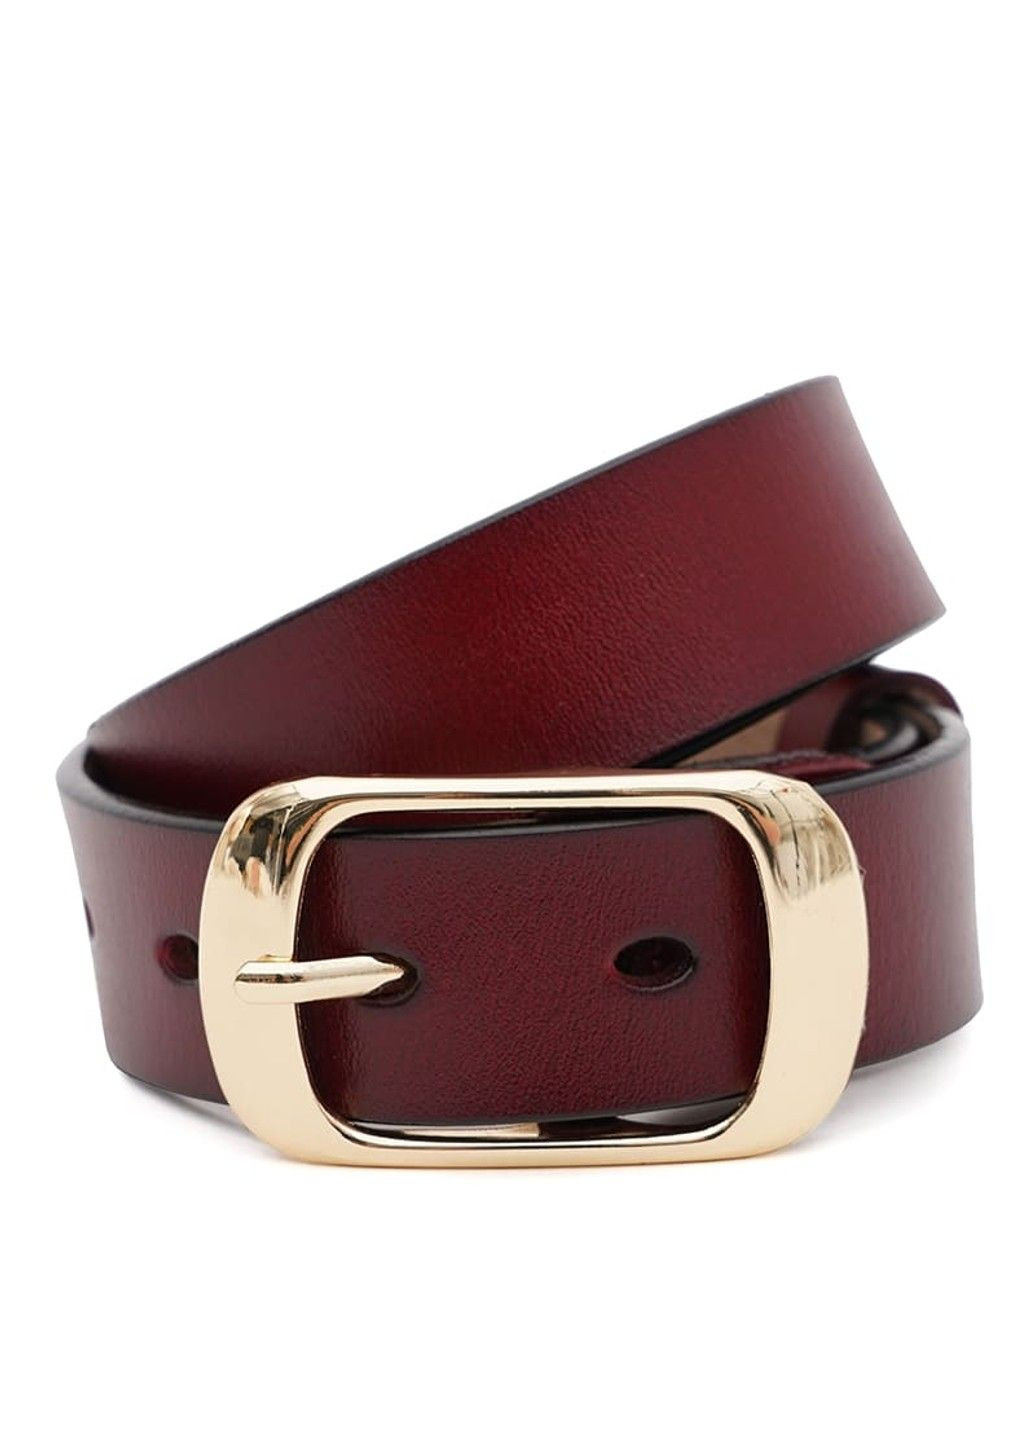 Женский кожаный ремень CV1ZK-008br-goldbrown Borsa Leather (291683159)